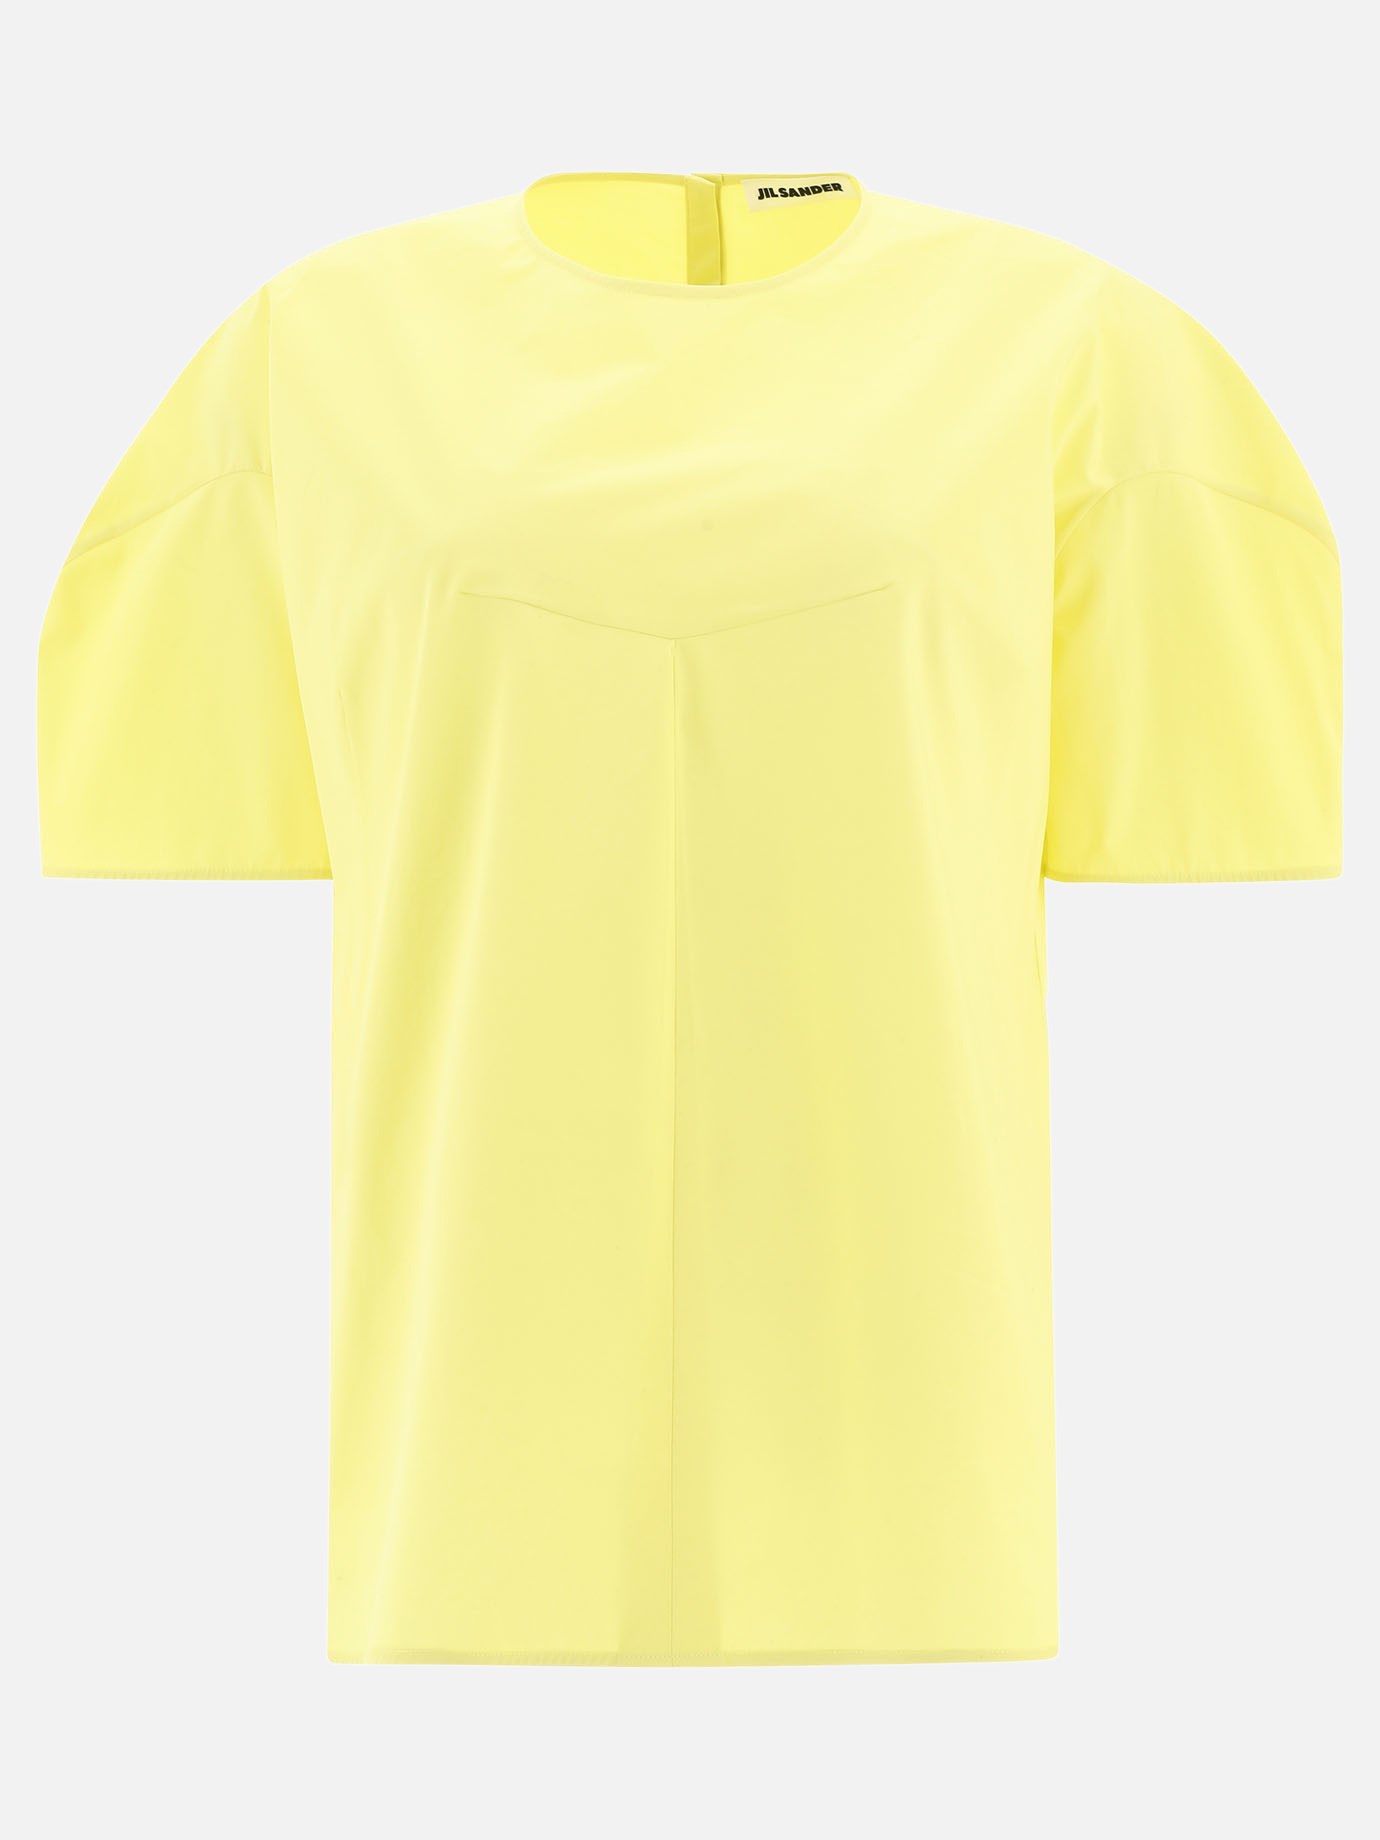 Puff sleeve t-shirtby Jil Sander - 3